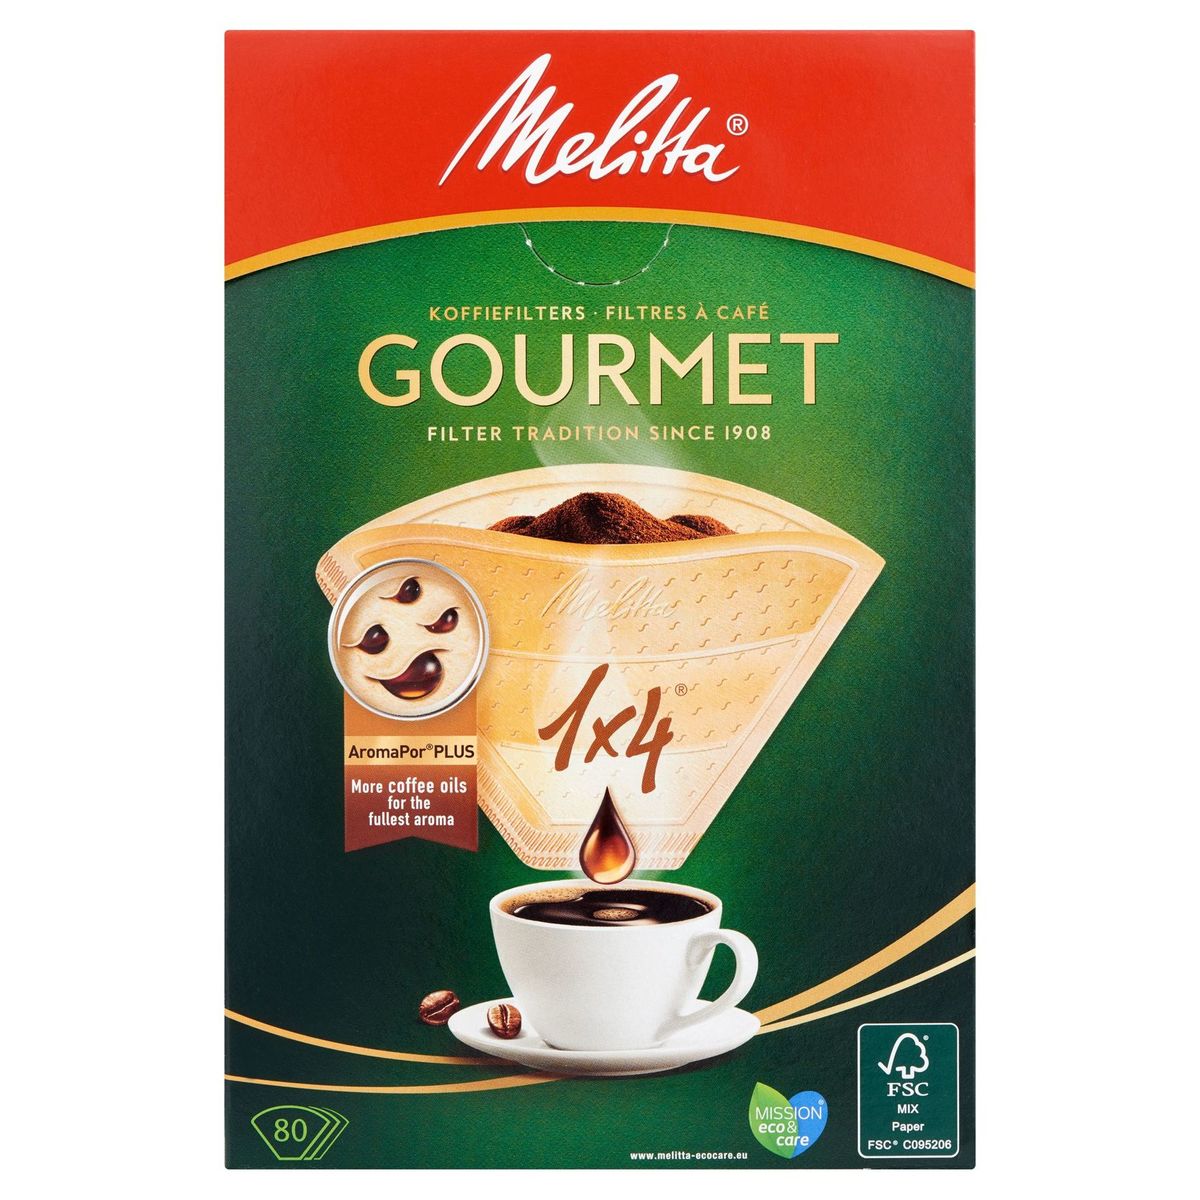 Melitta Koffiefilters Gourmet 1 x 4 80 Stuks